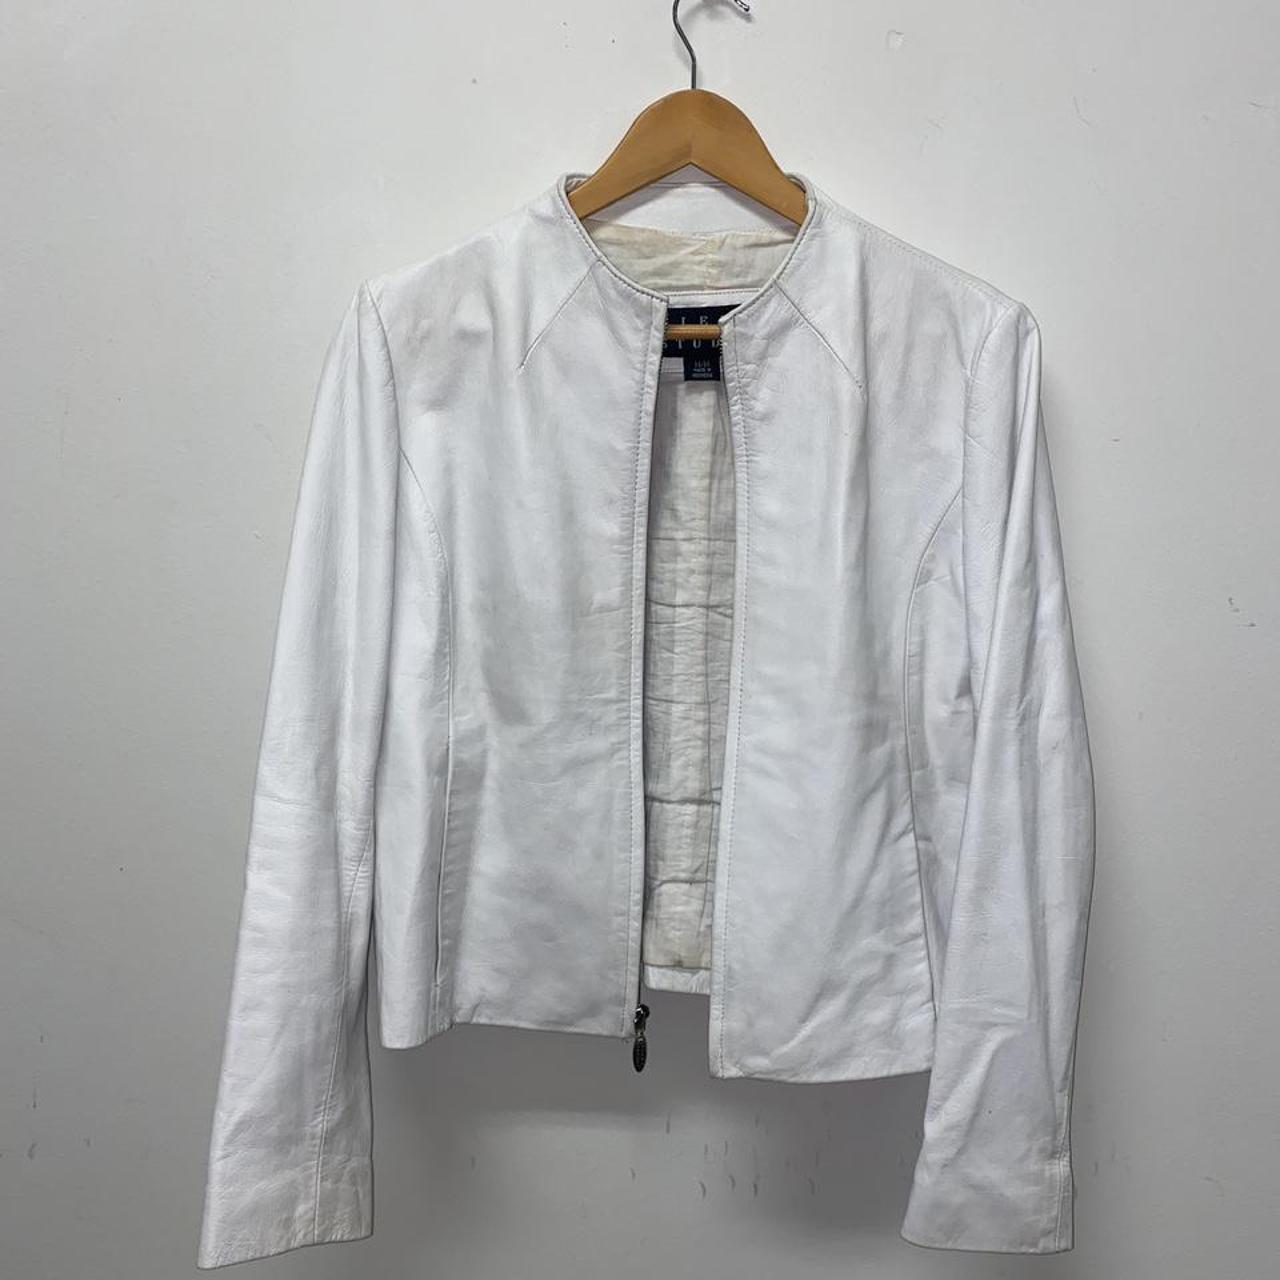 White leather jacket by Siena studio silver zipper... - Depop